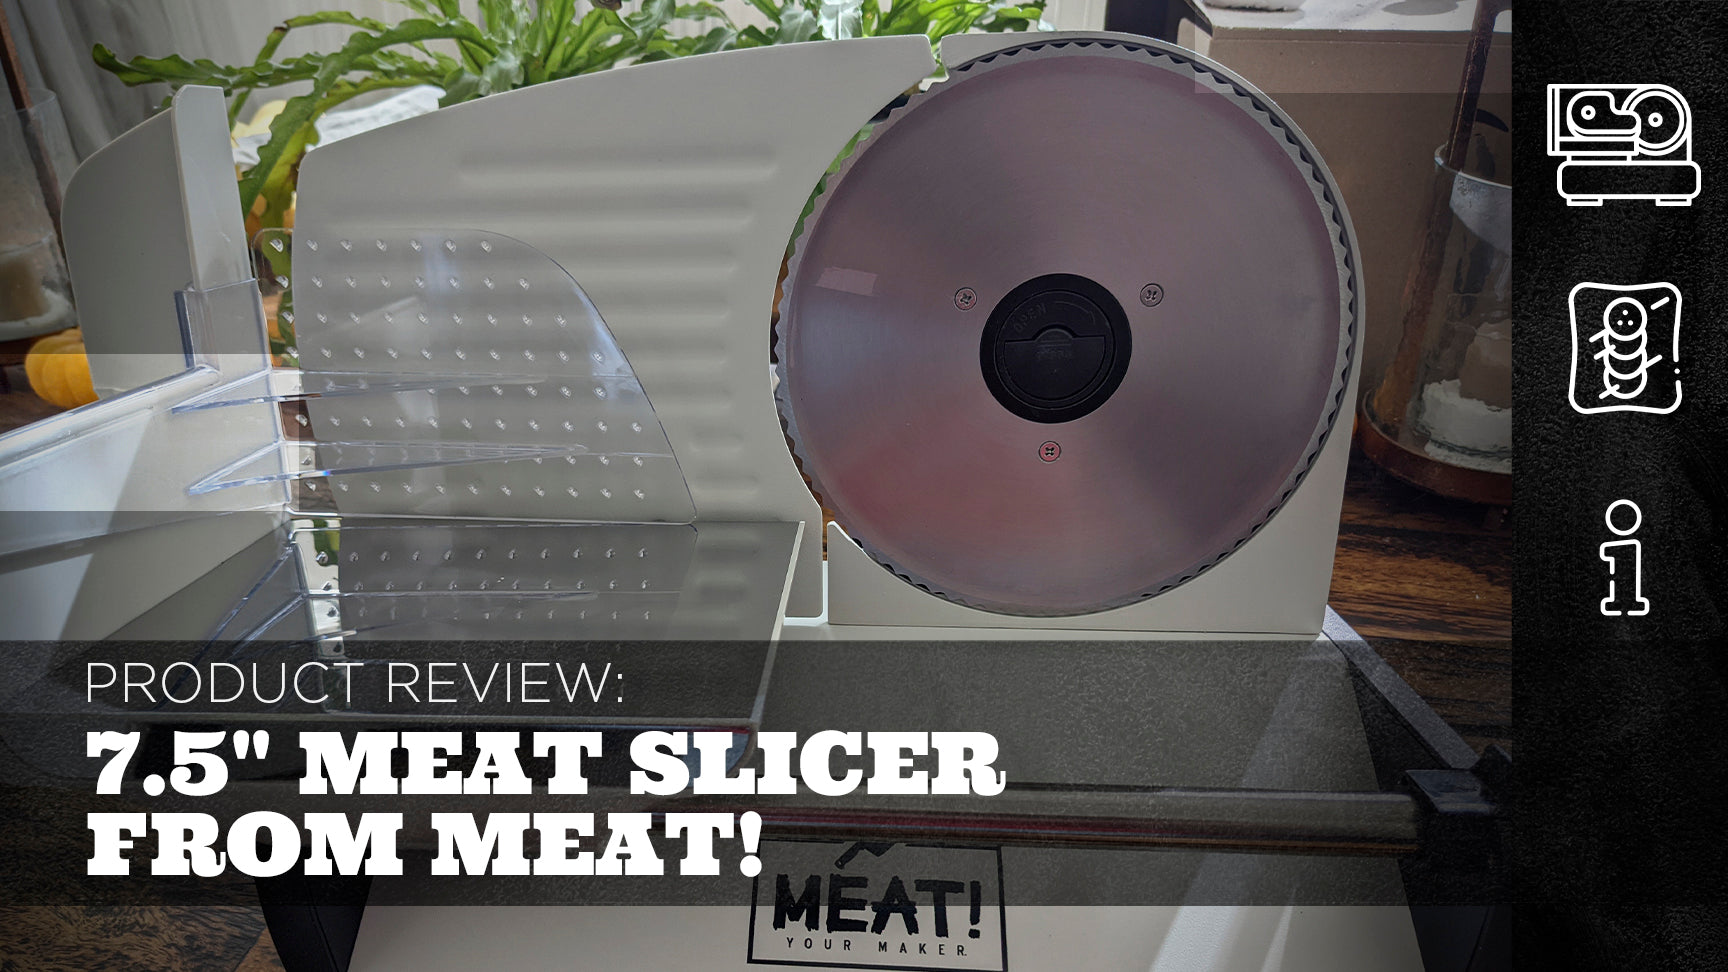 Top 5 Best Manual Frozen Meat Slicers in 2022 Reviews 